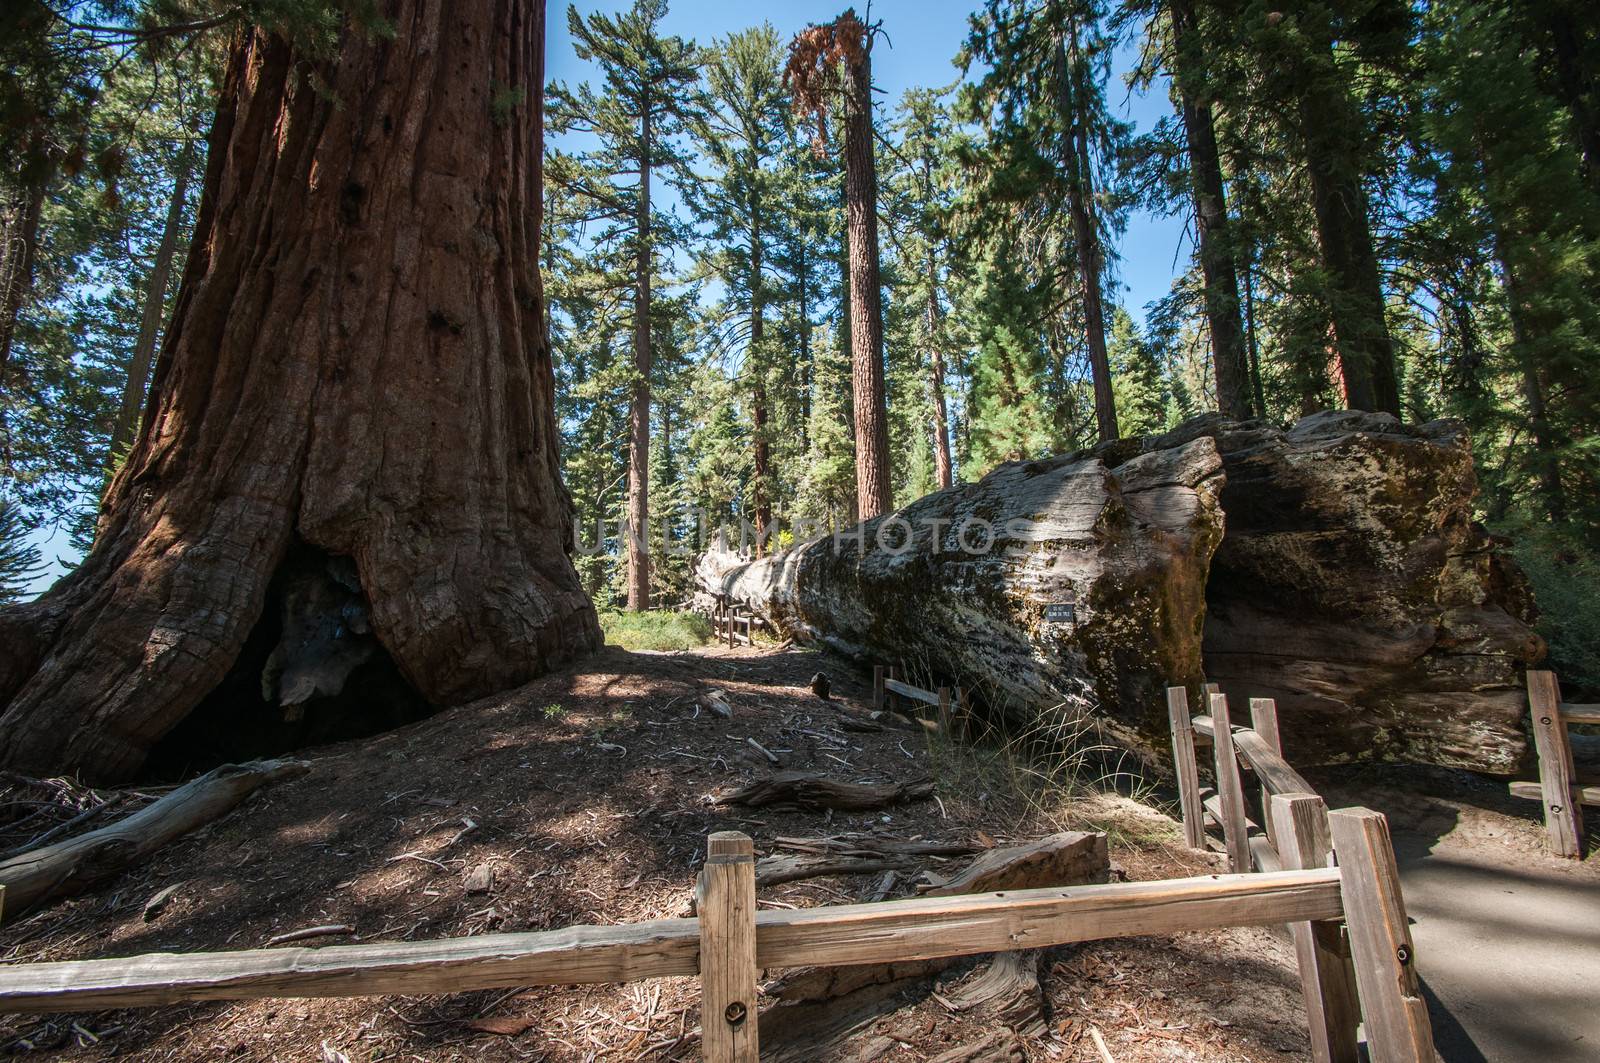 bole Sequoia by weltreisendertj